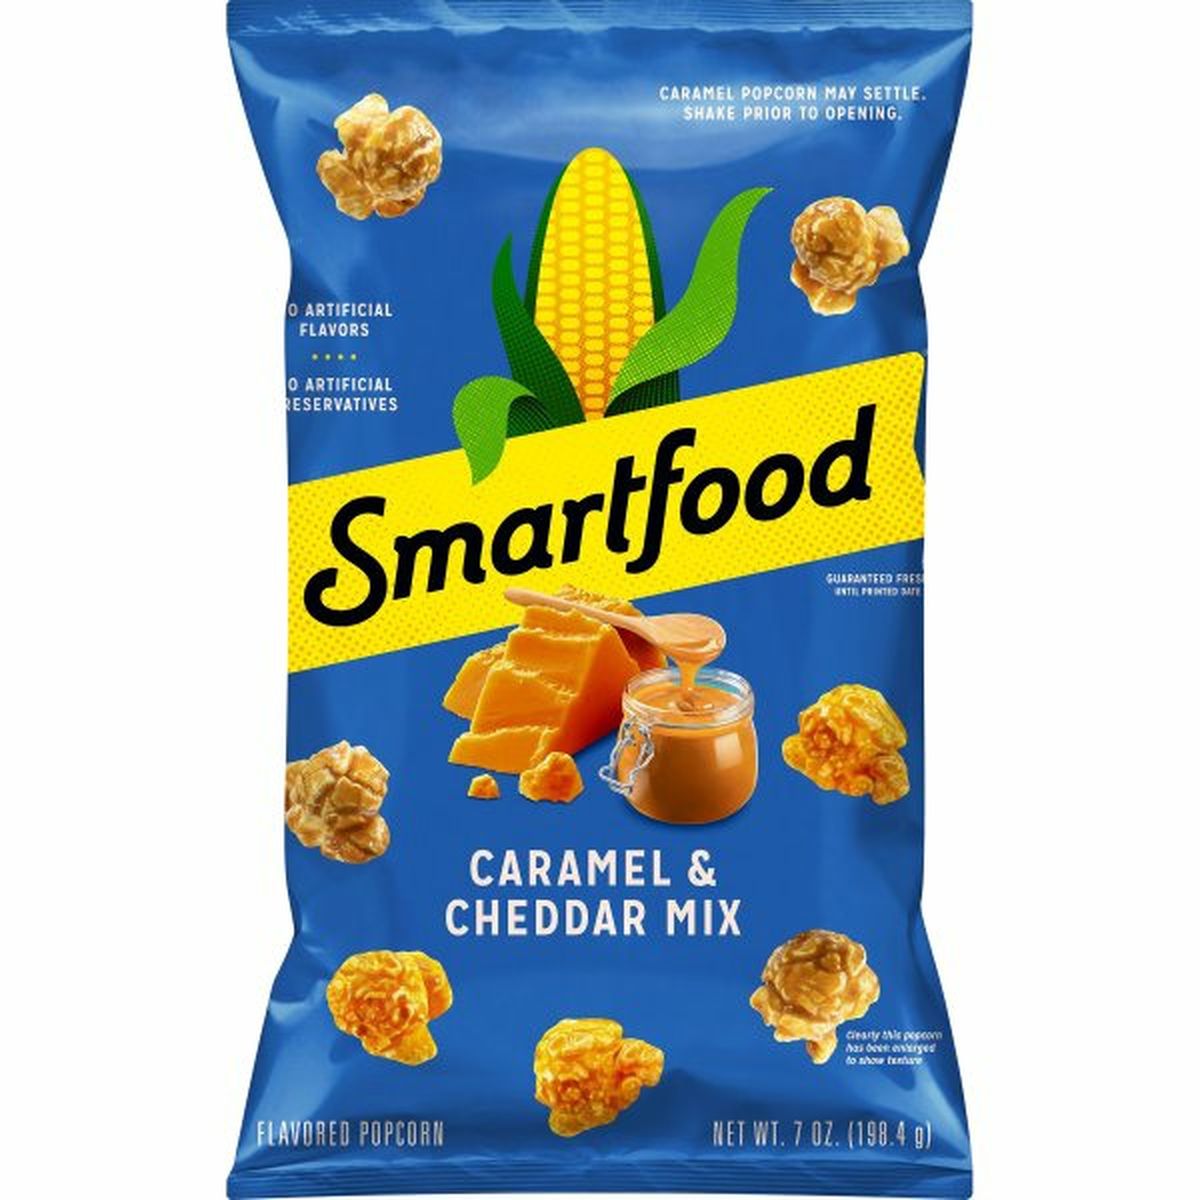 Calories in Smartfood Popcorn, Caramel & Cheddar Mix